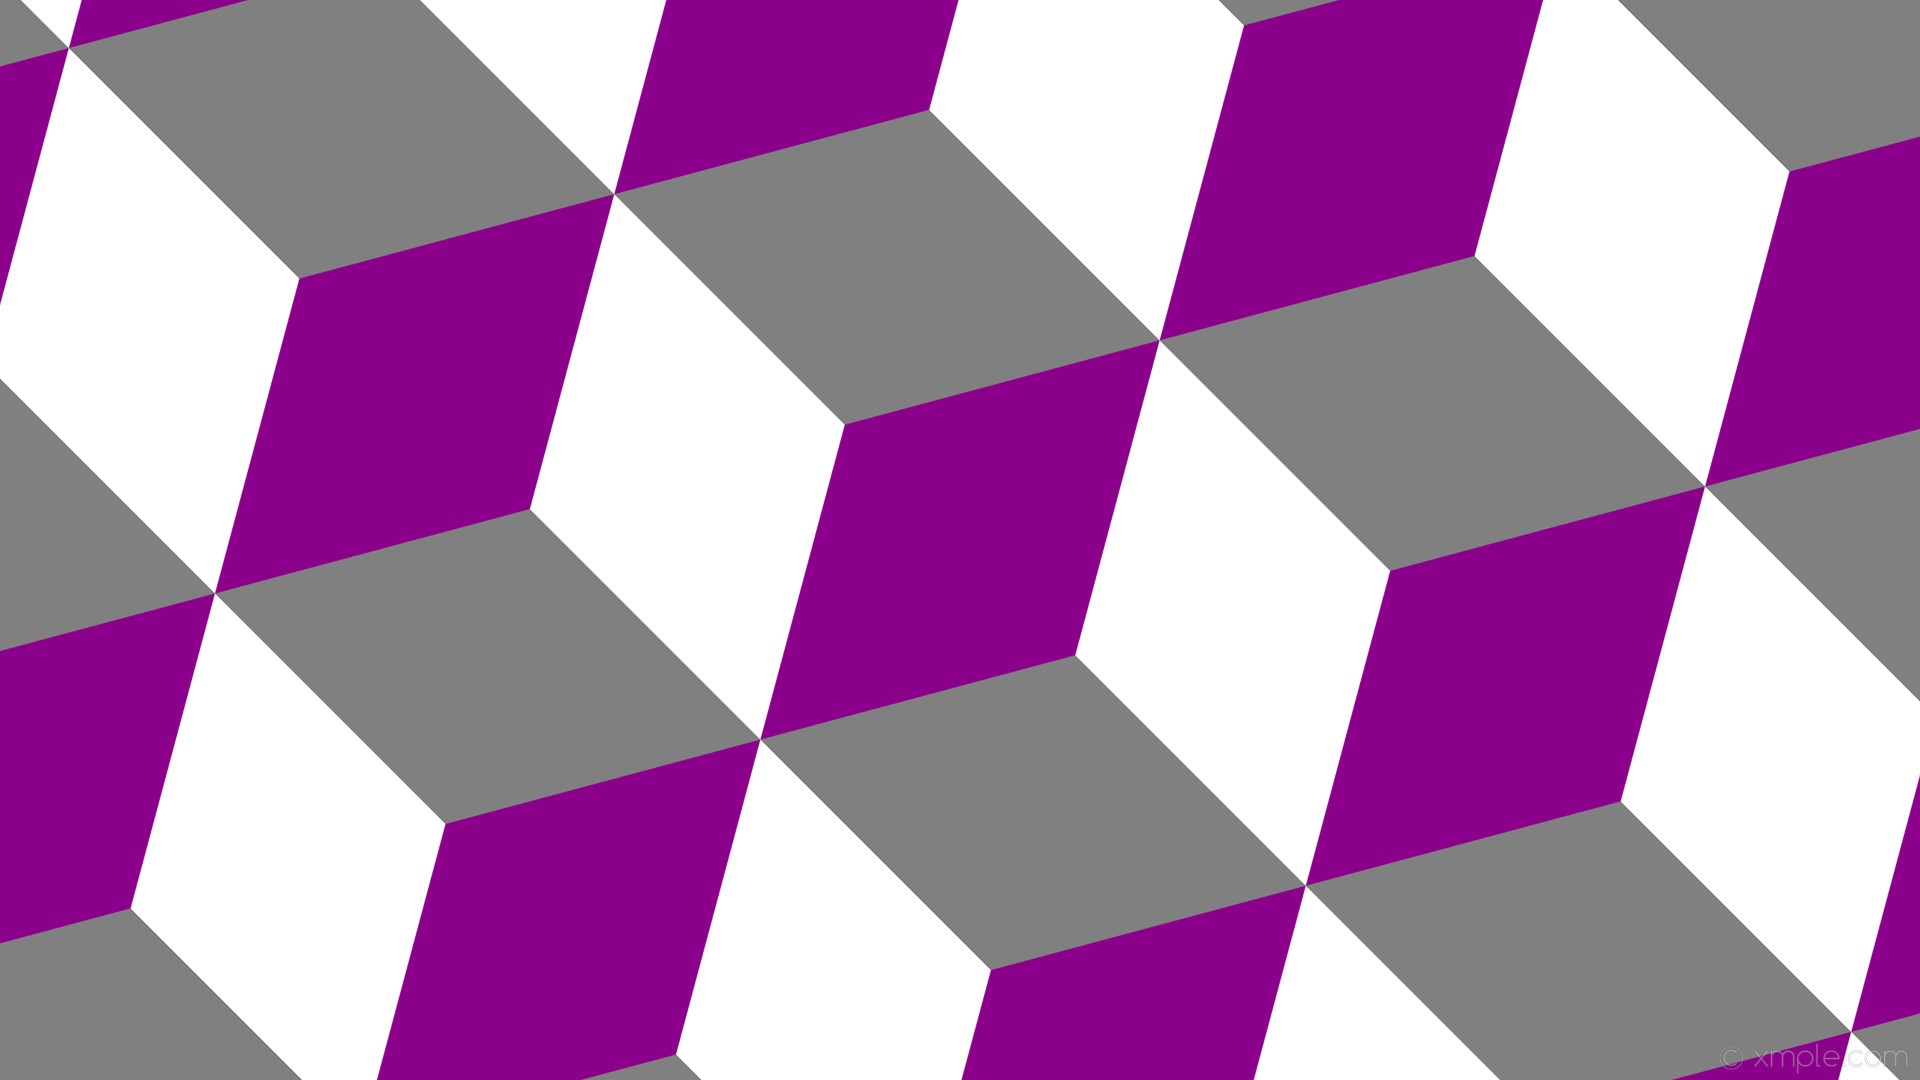 1920x1080 wallpaper purple 3d cubes grey white dark magenta gray #8b008b #808080  #ffffff 45